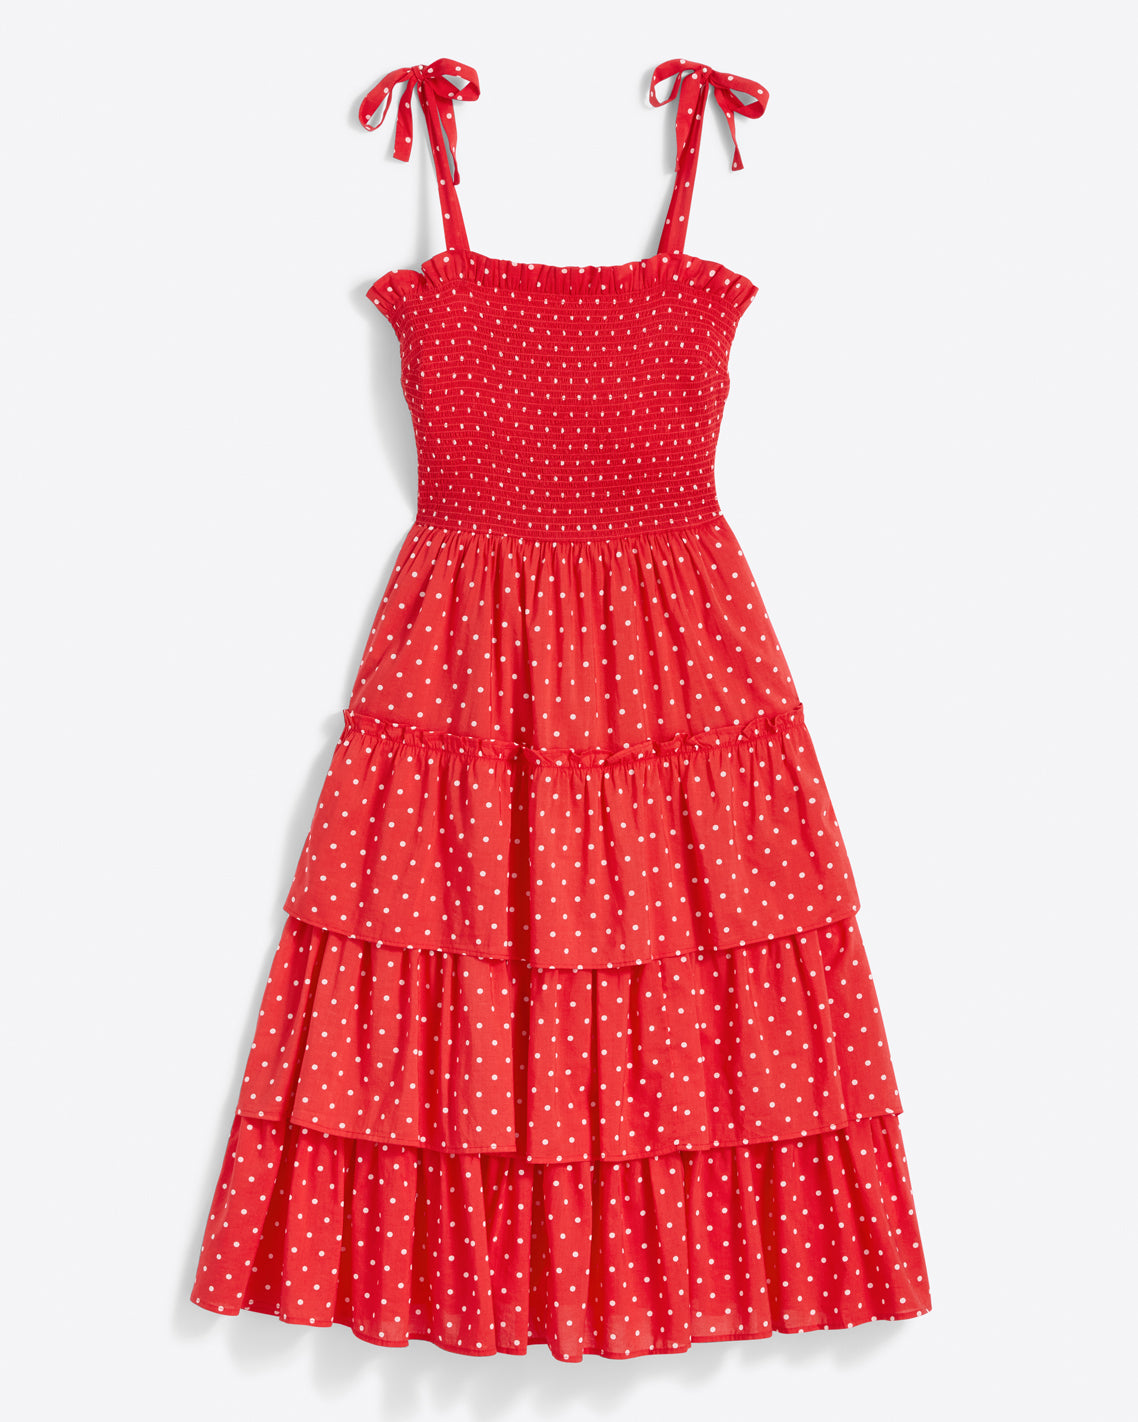 Sawyer Dress in Red Polka Dot – Draper James